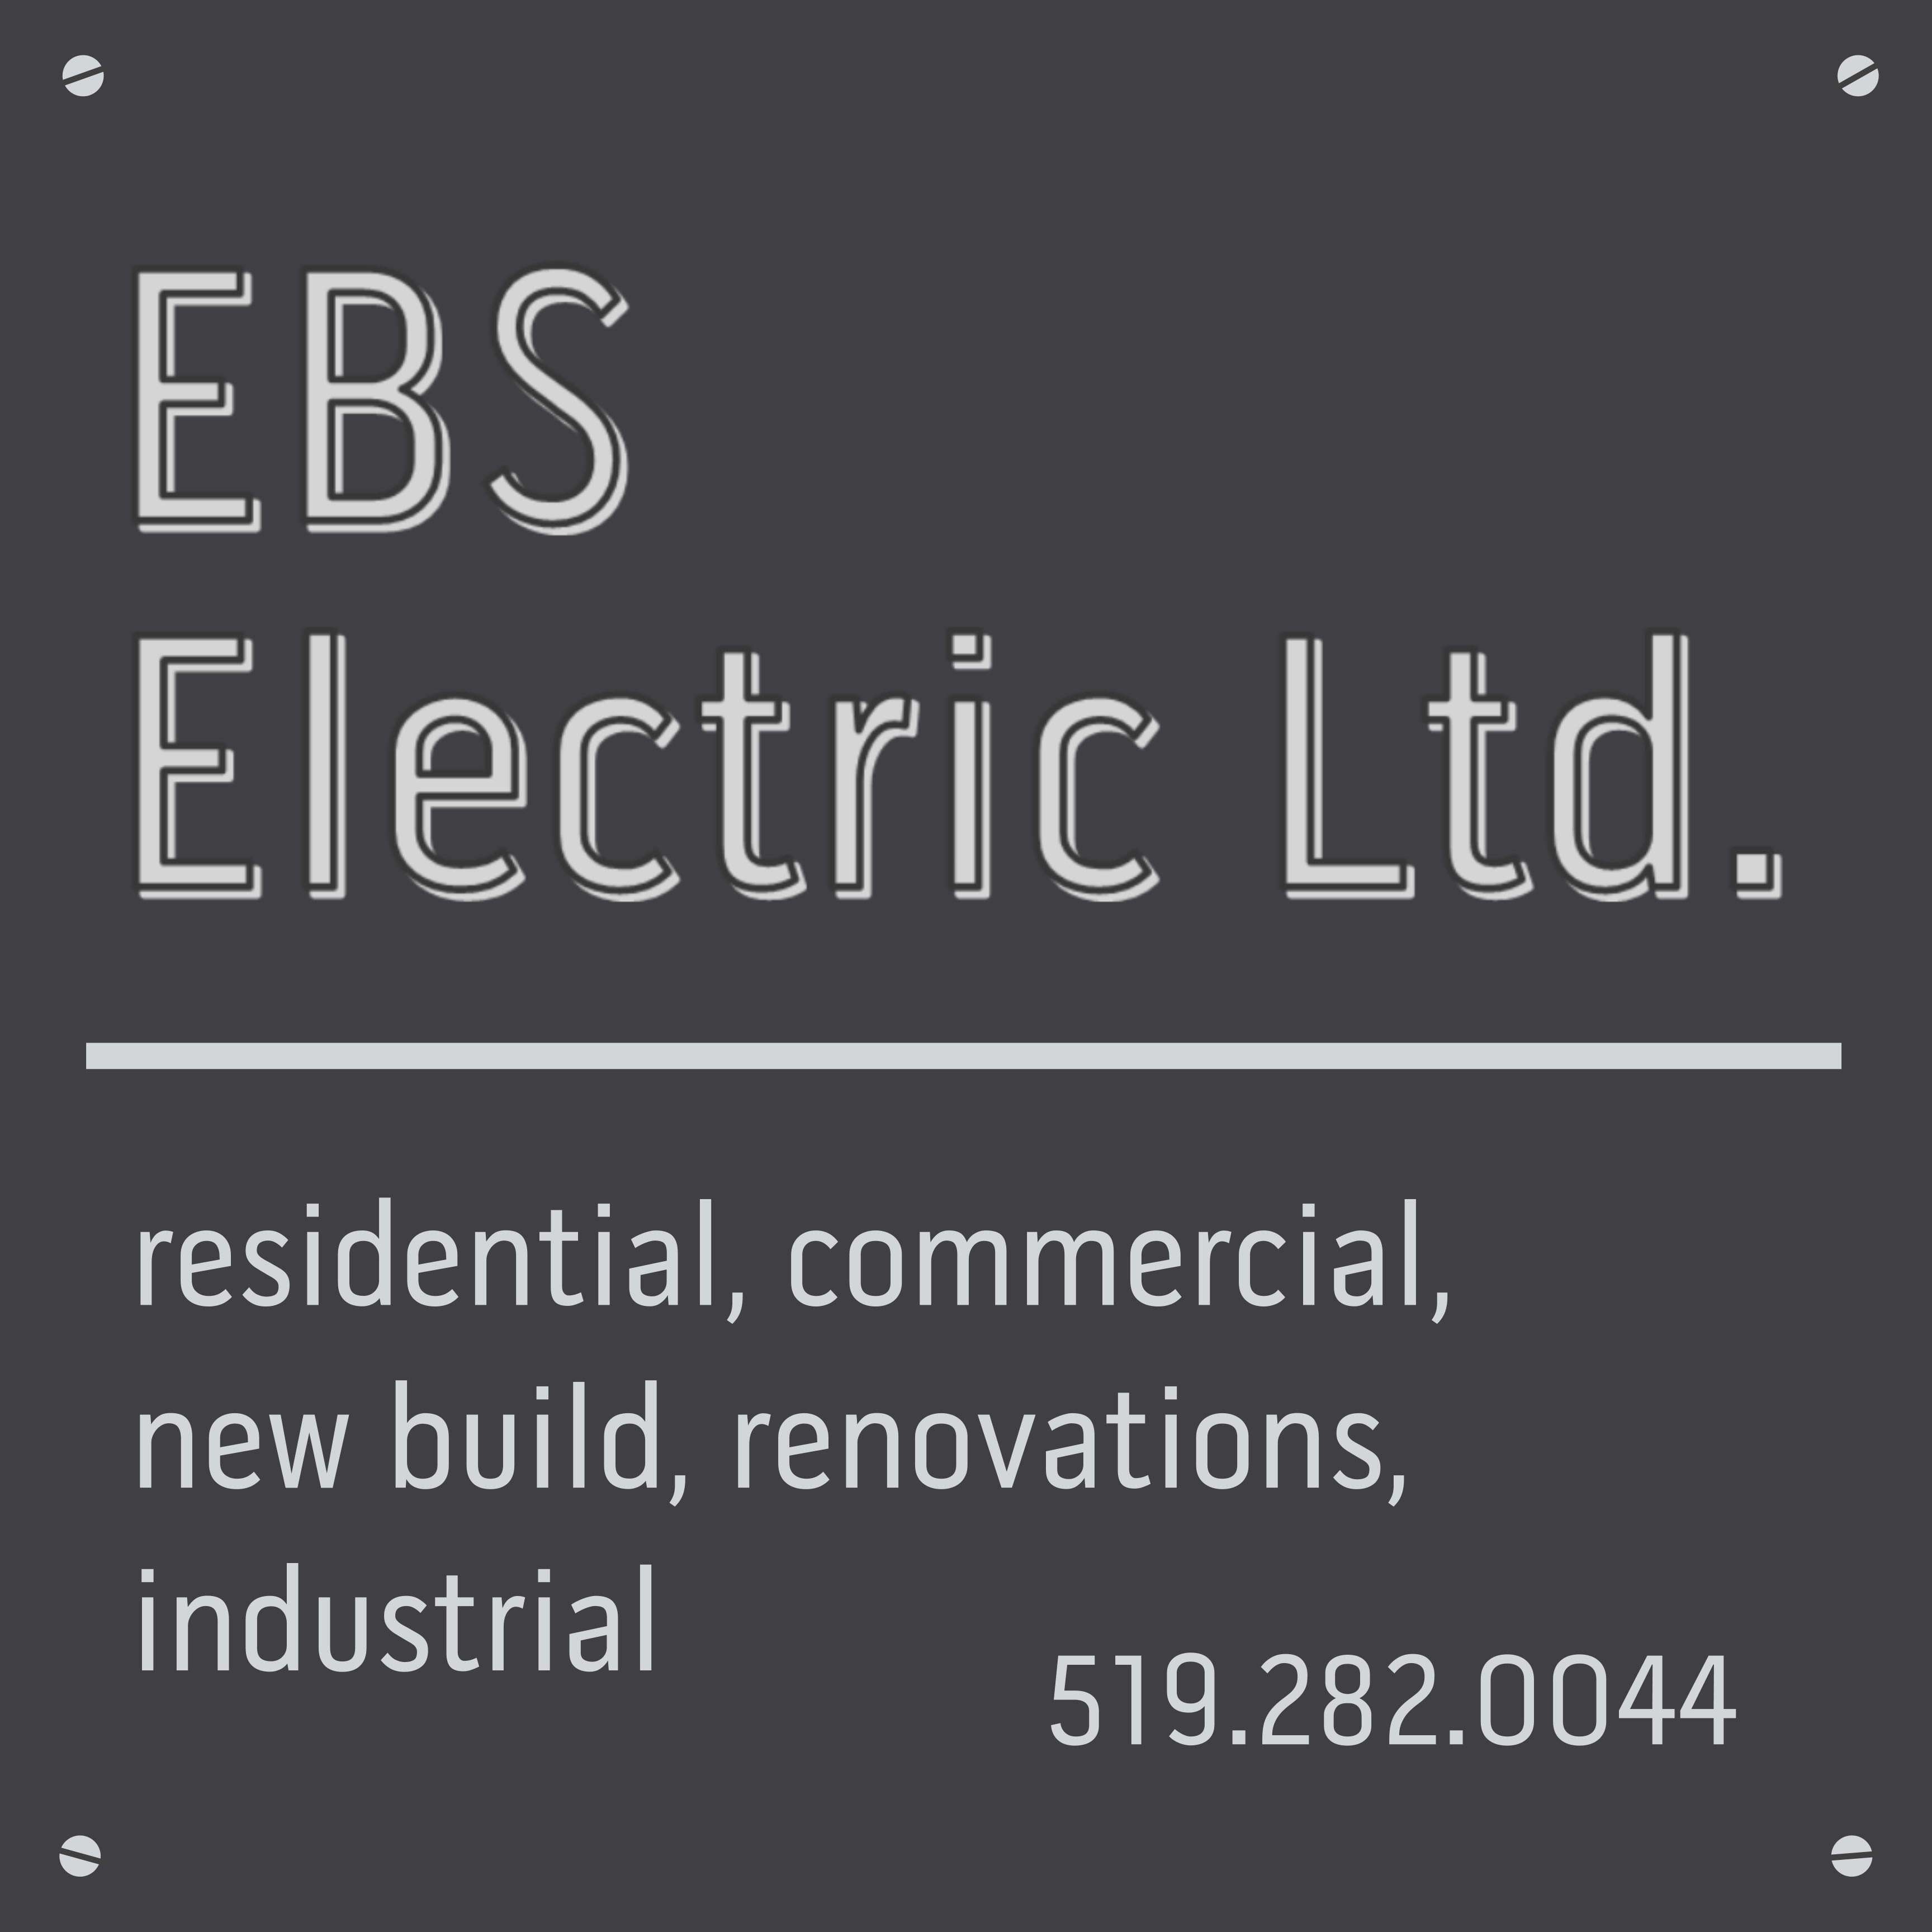 EBS Electric